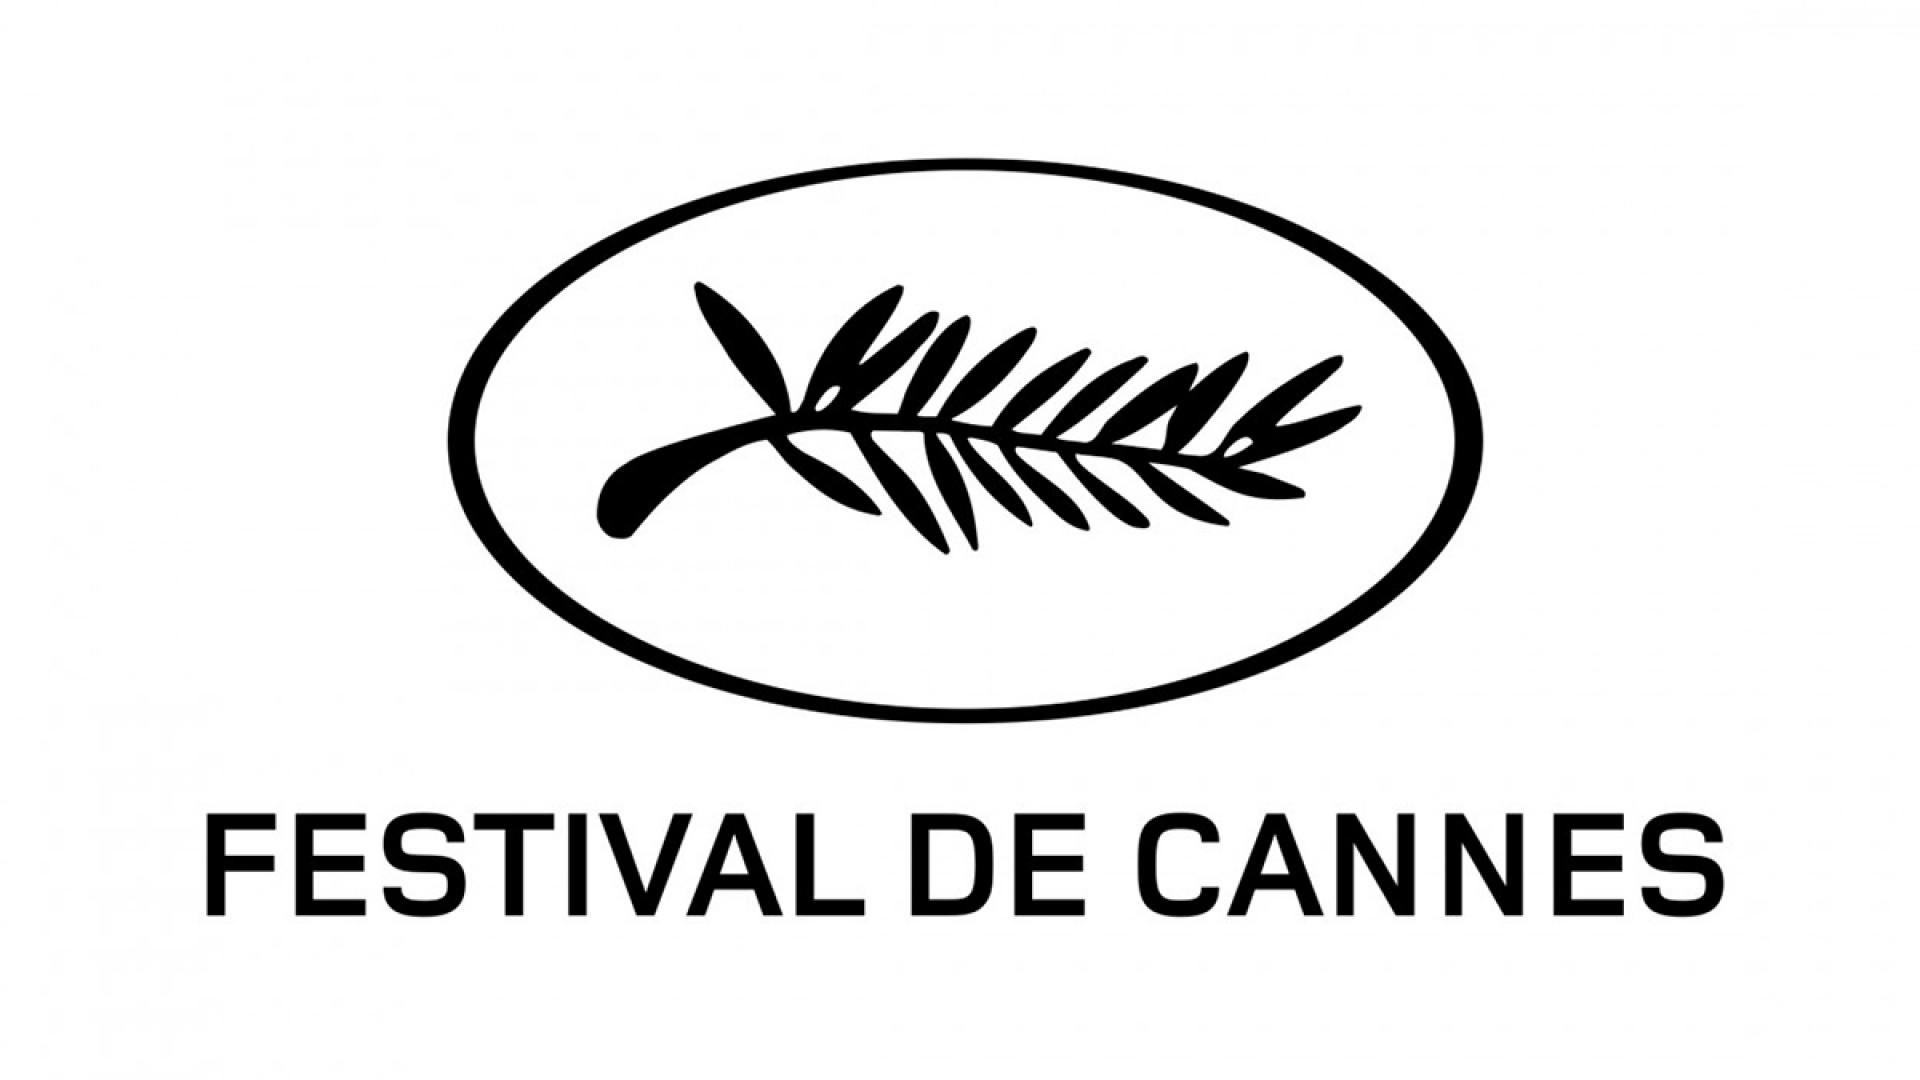 festiwal Cannes, odwołany